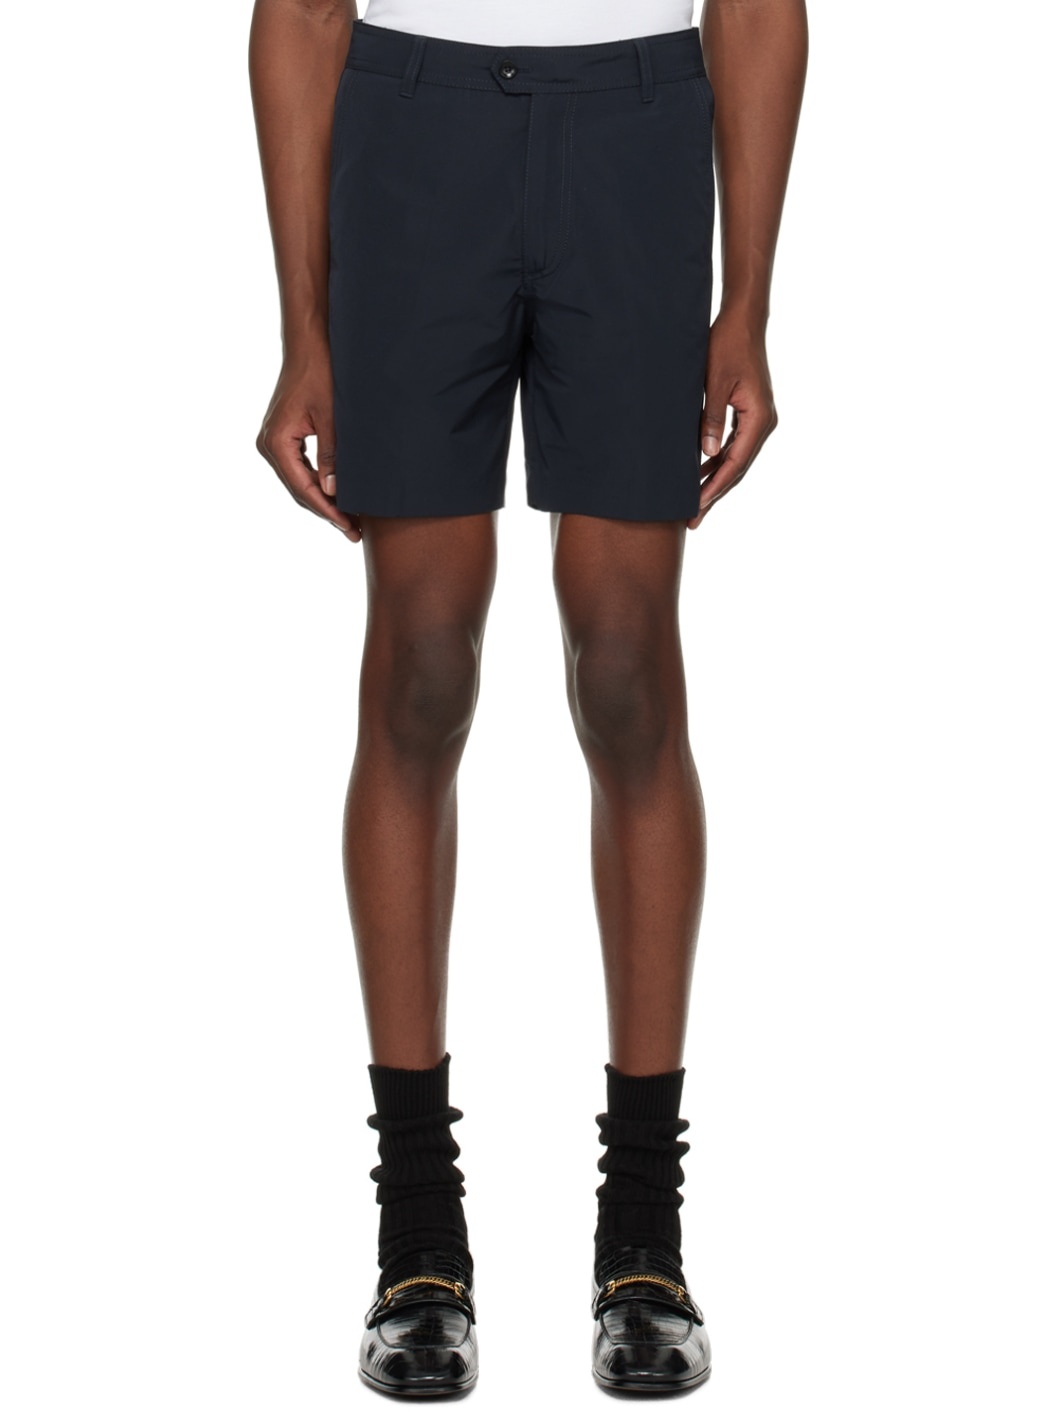 Black Technical Shorts - 1